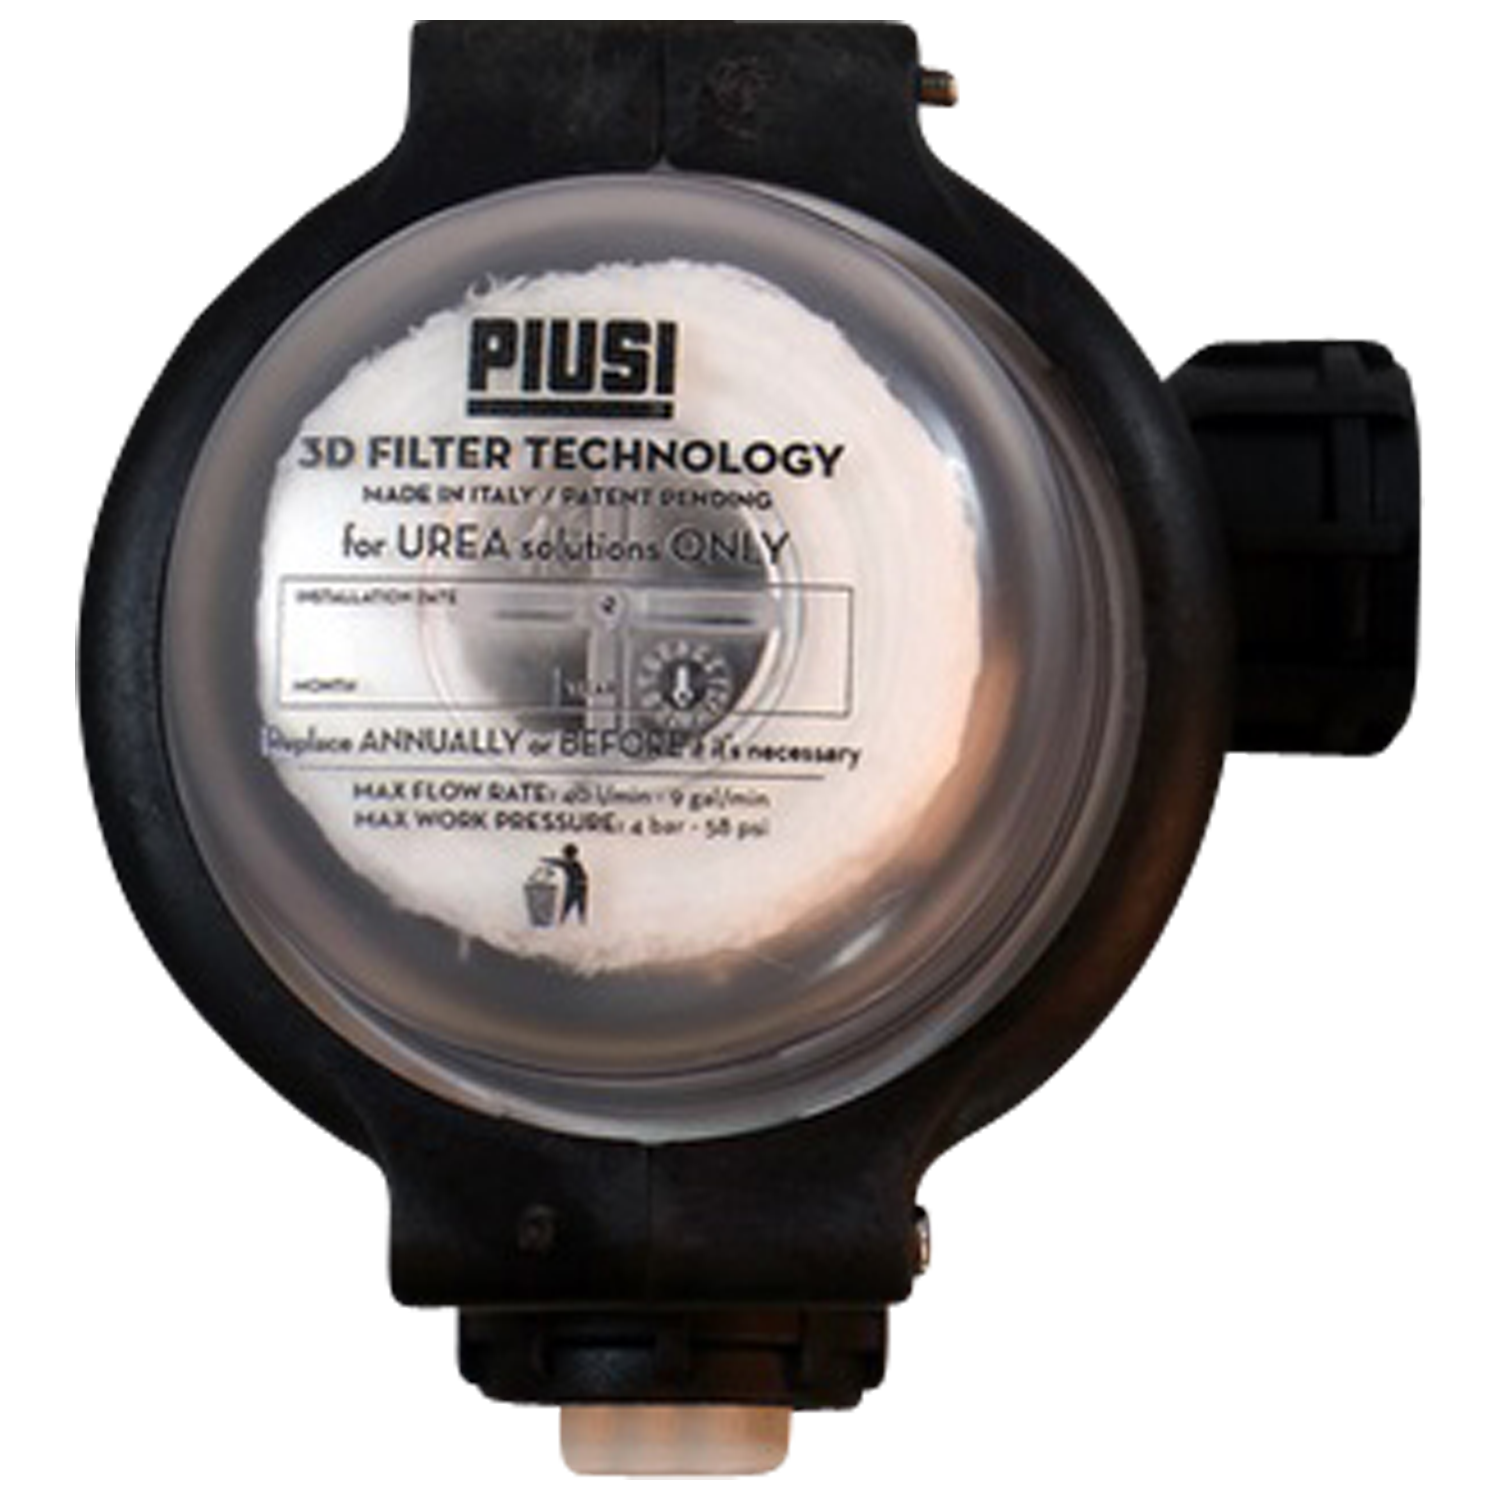 Piusi AdBlue-Filter 3D Anbausatz F00611D30 Patzelt GmbH Kassel.png